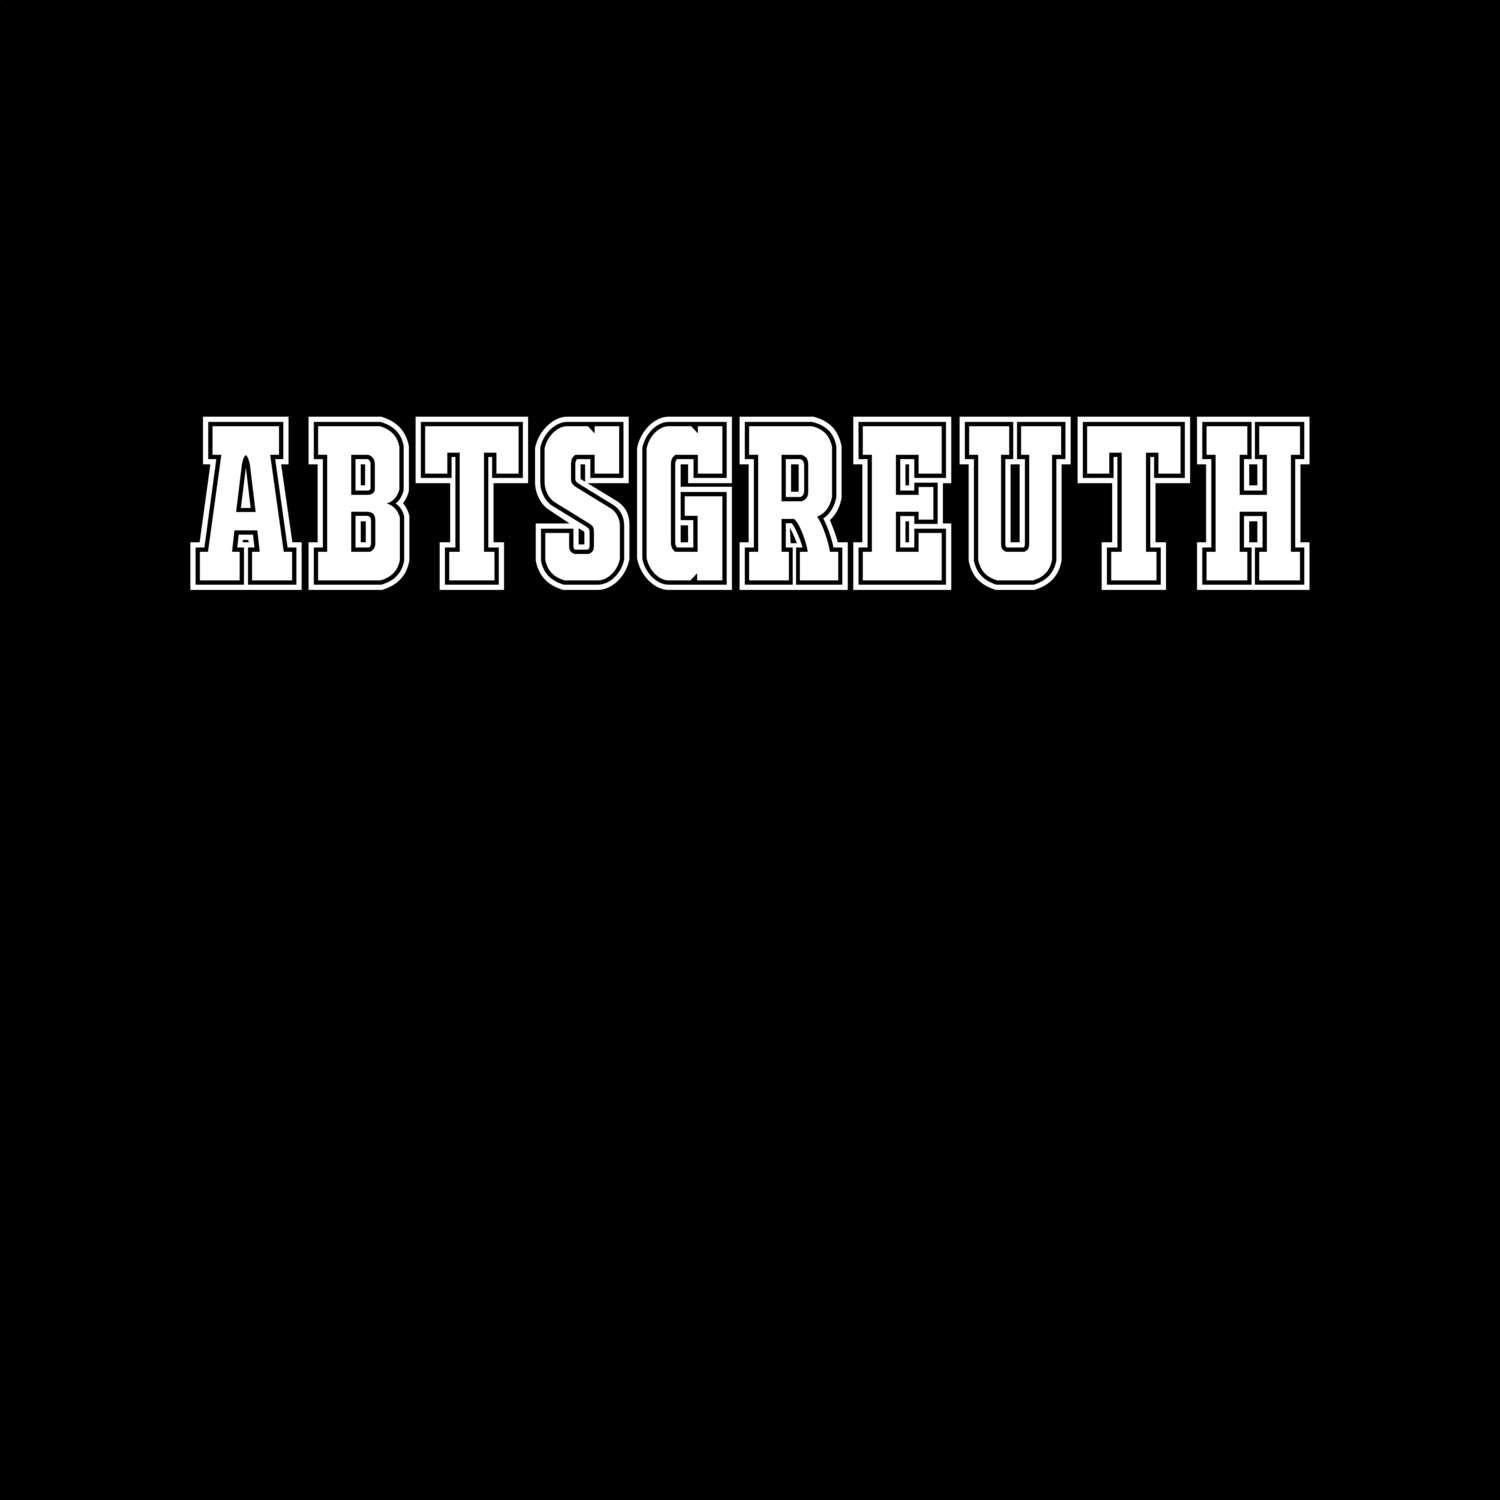 Abtsgreuth T-Shirt »Classic«